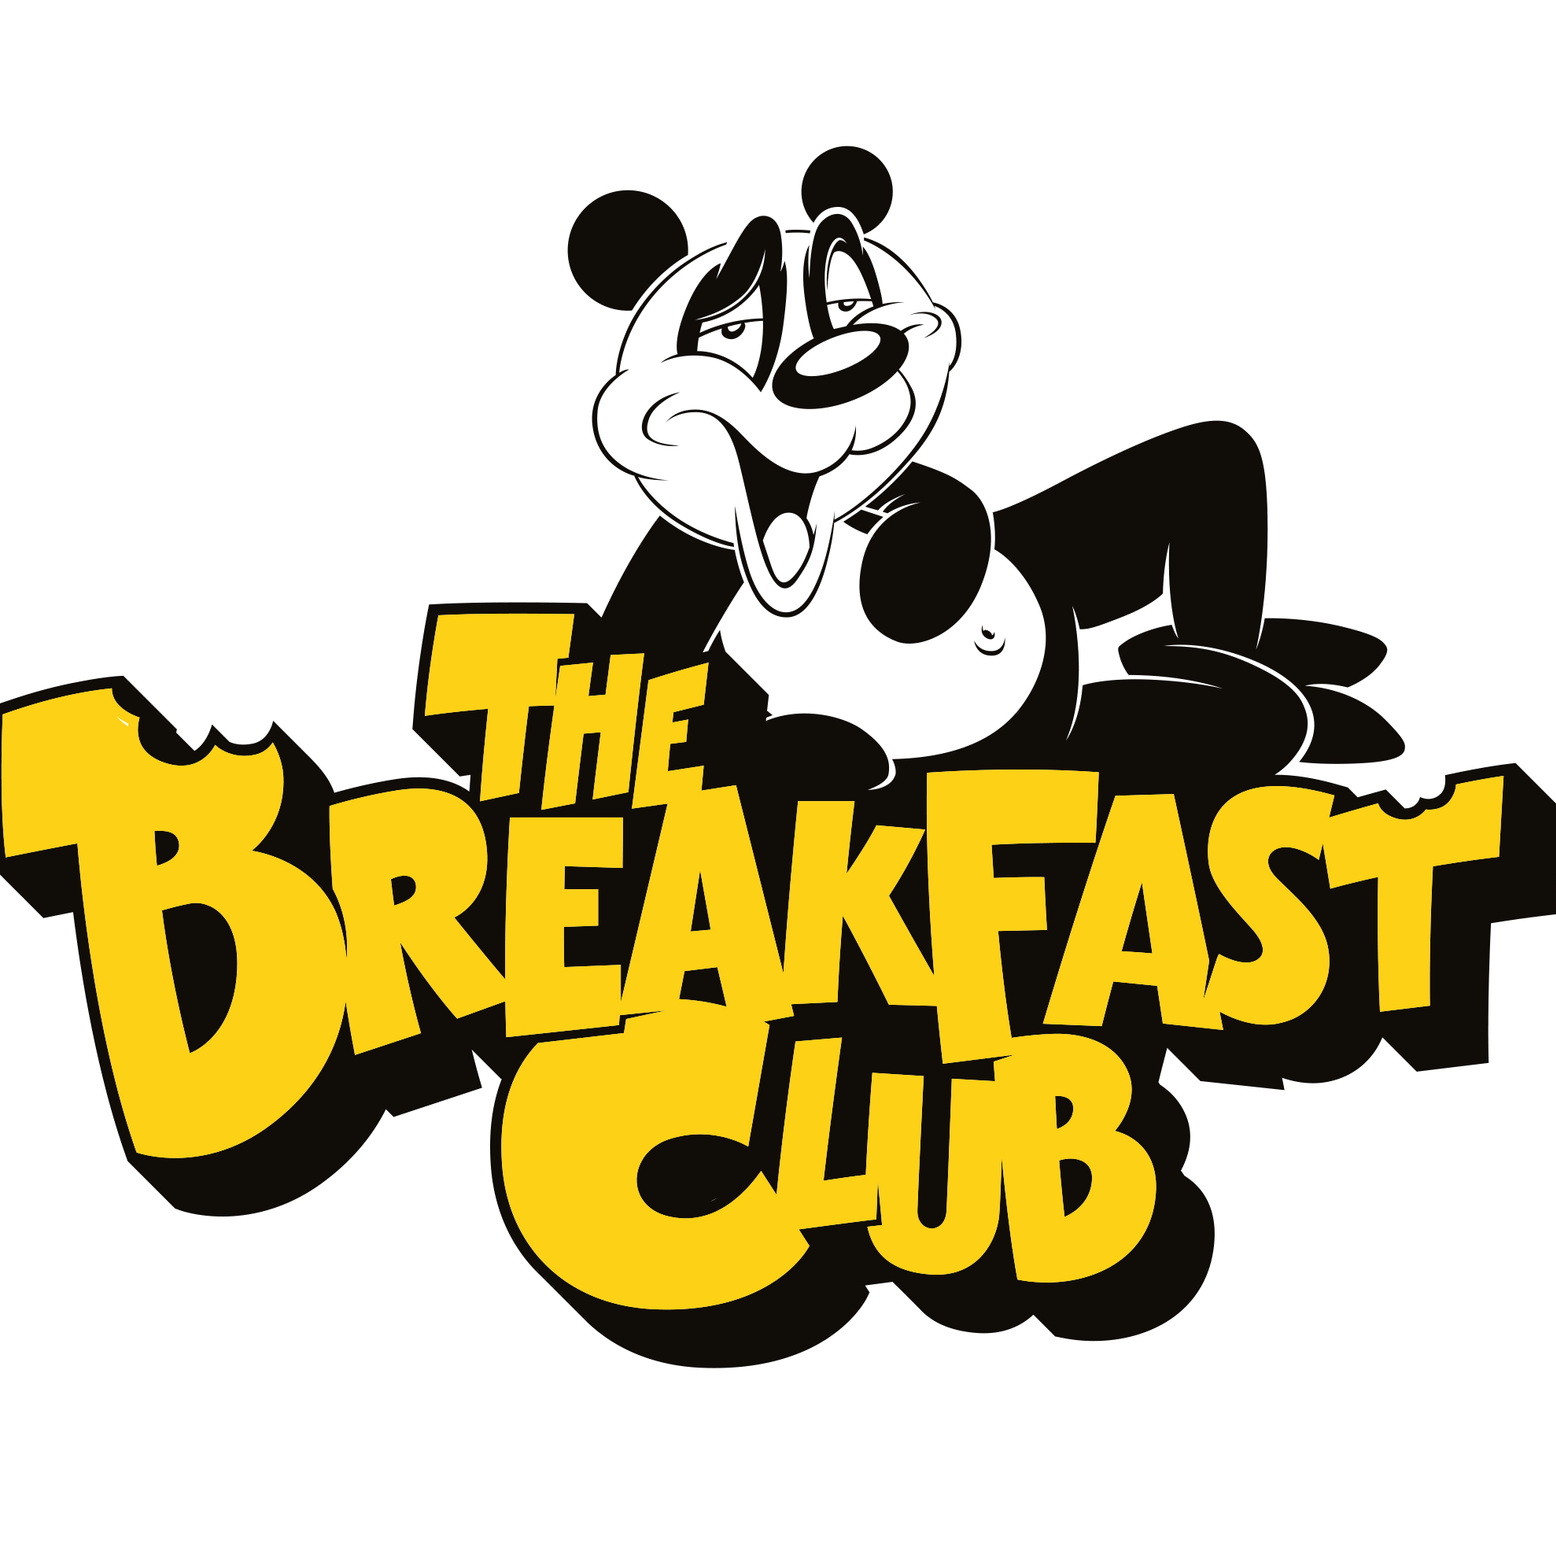 The Breakfast Club - Opening Soon Logo